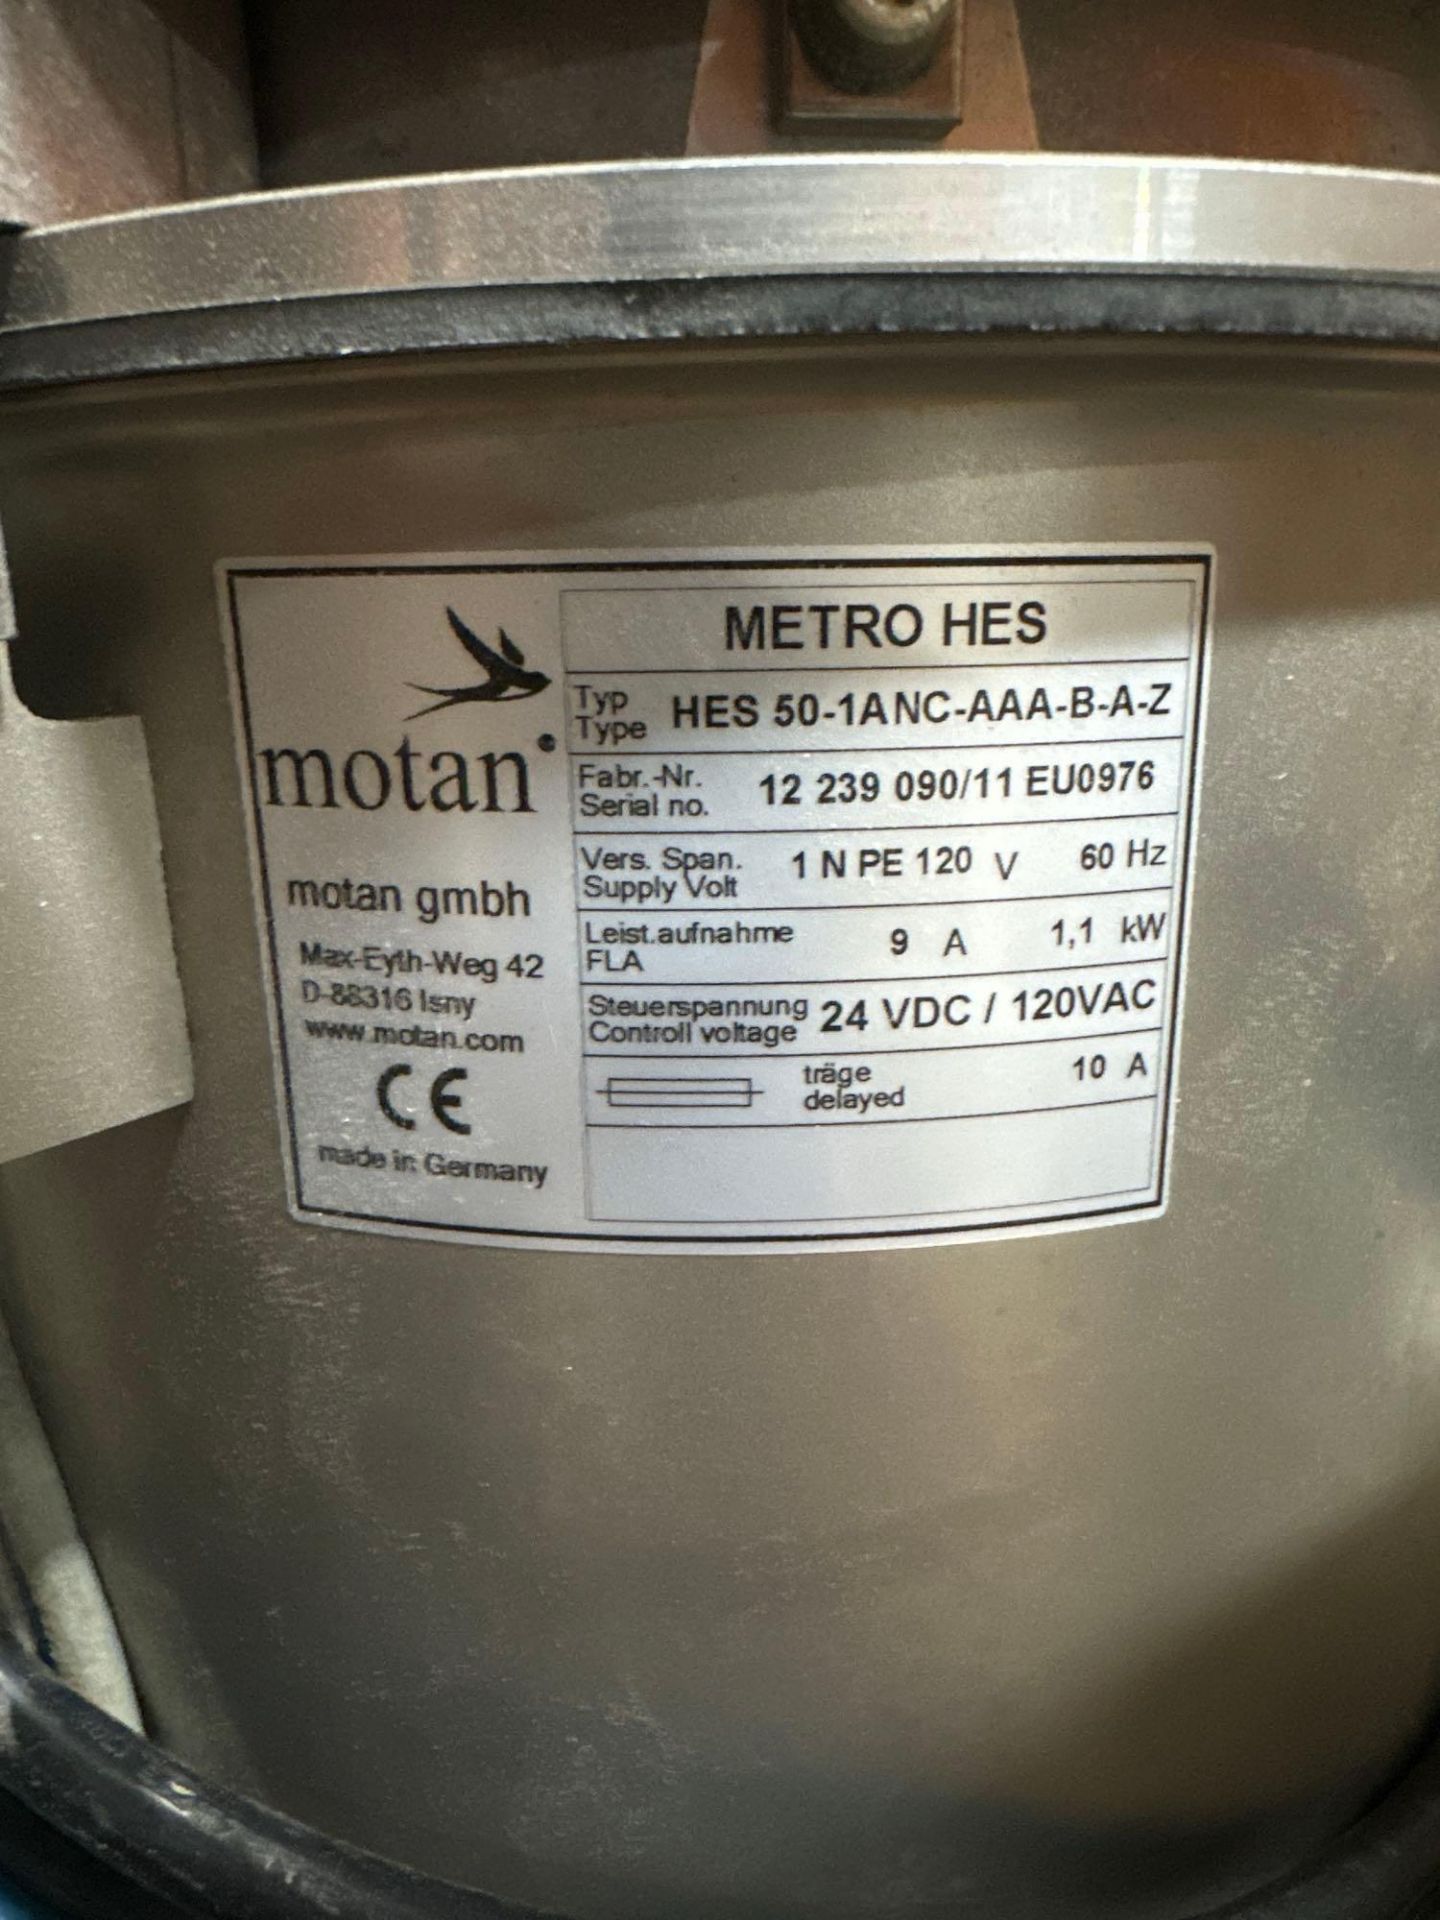 Motan Metro HES 50 Resin Vacuum Loader, 110V, s/n 12 239 090/11 EU0976 - Image 4 of 4